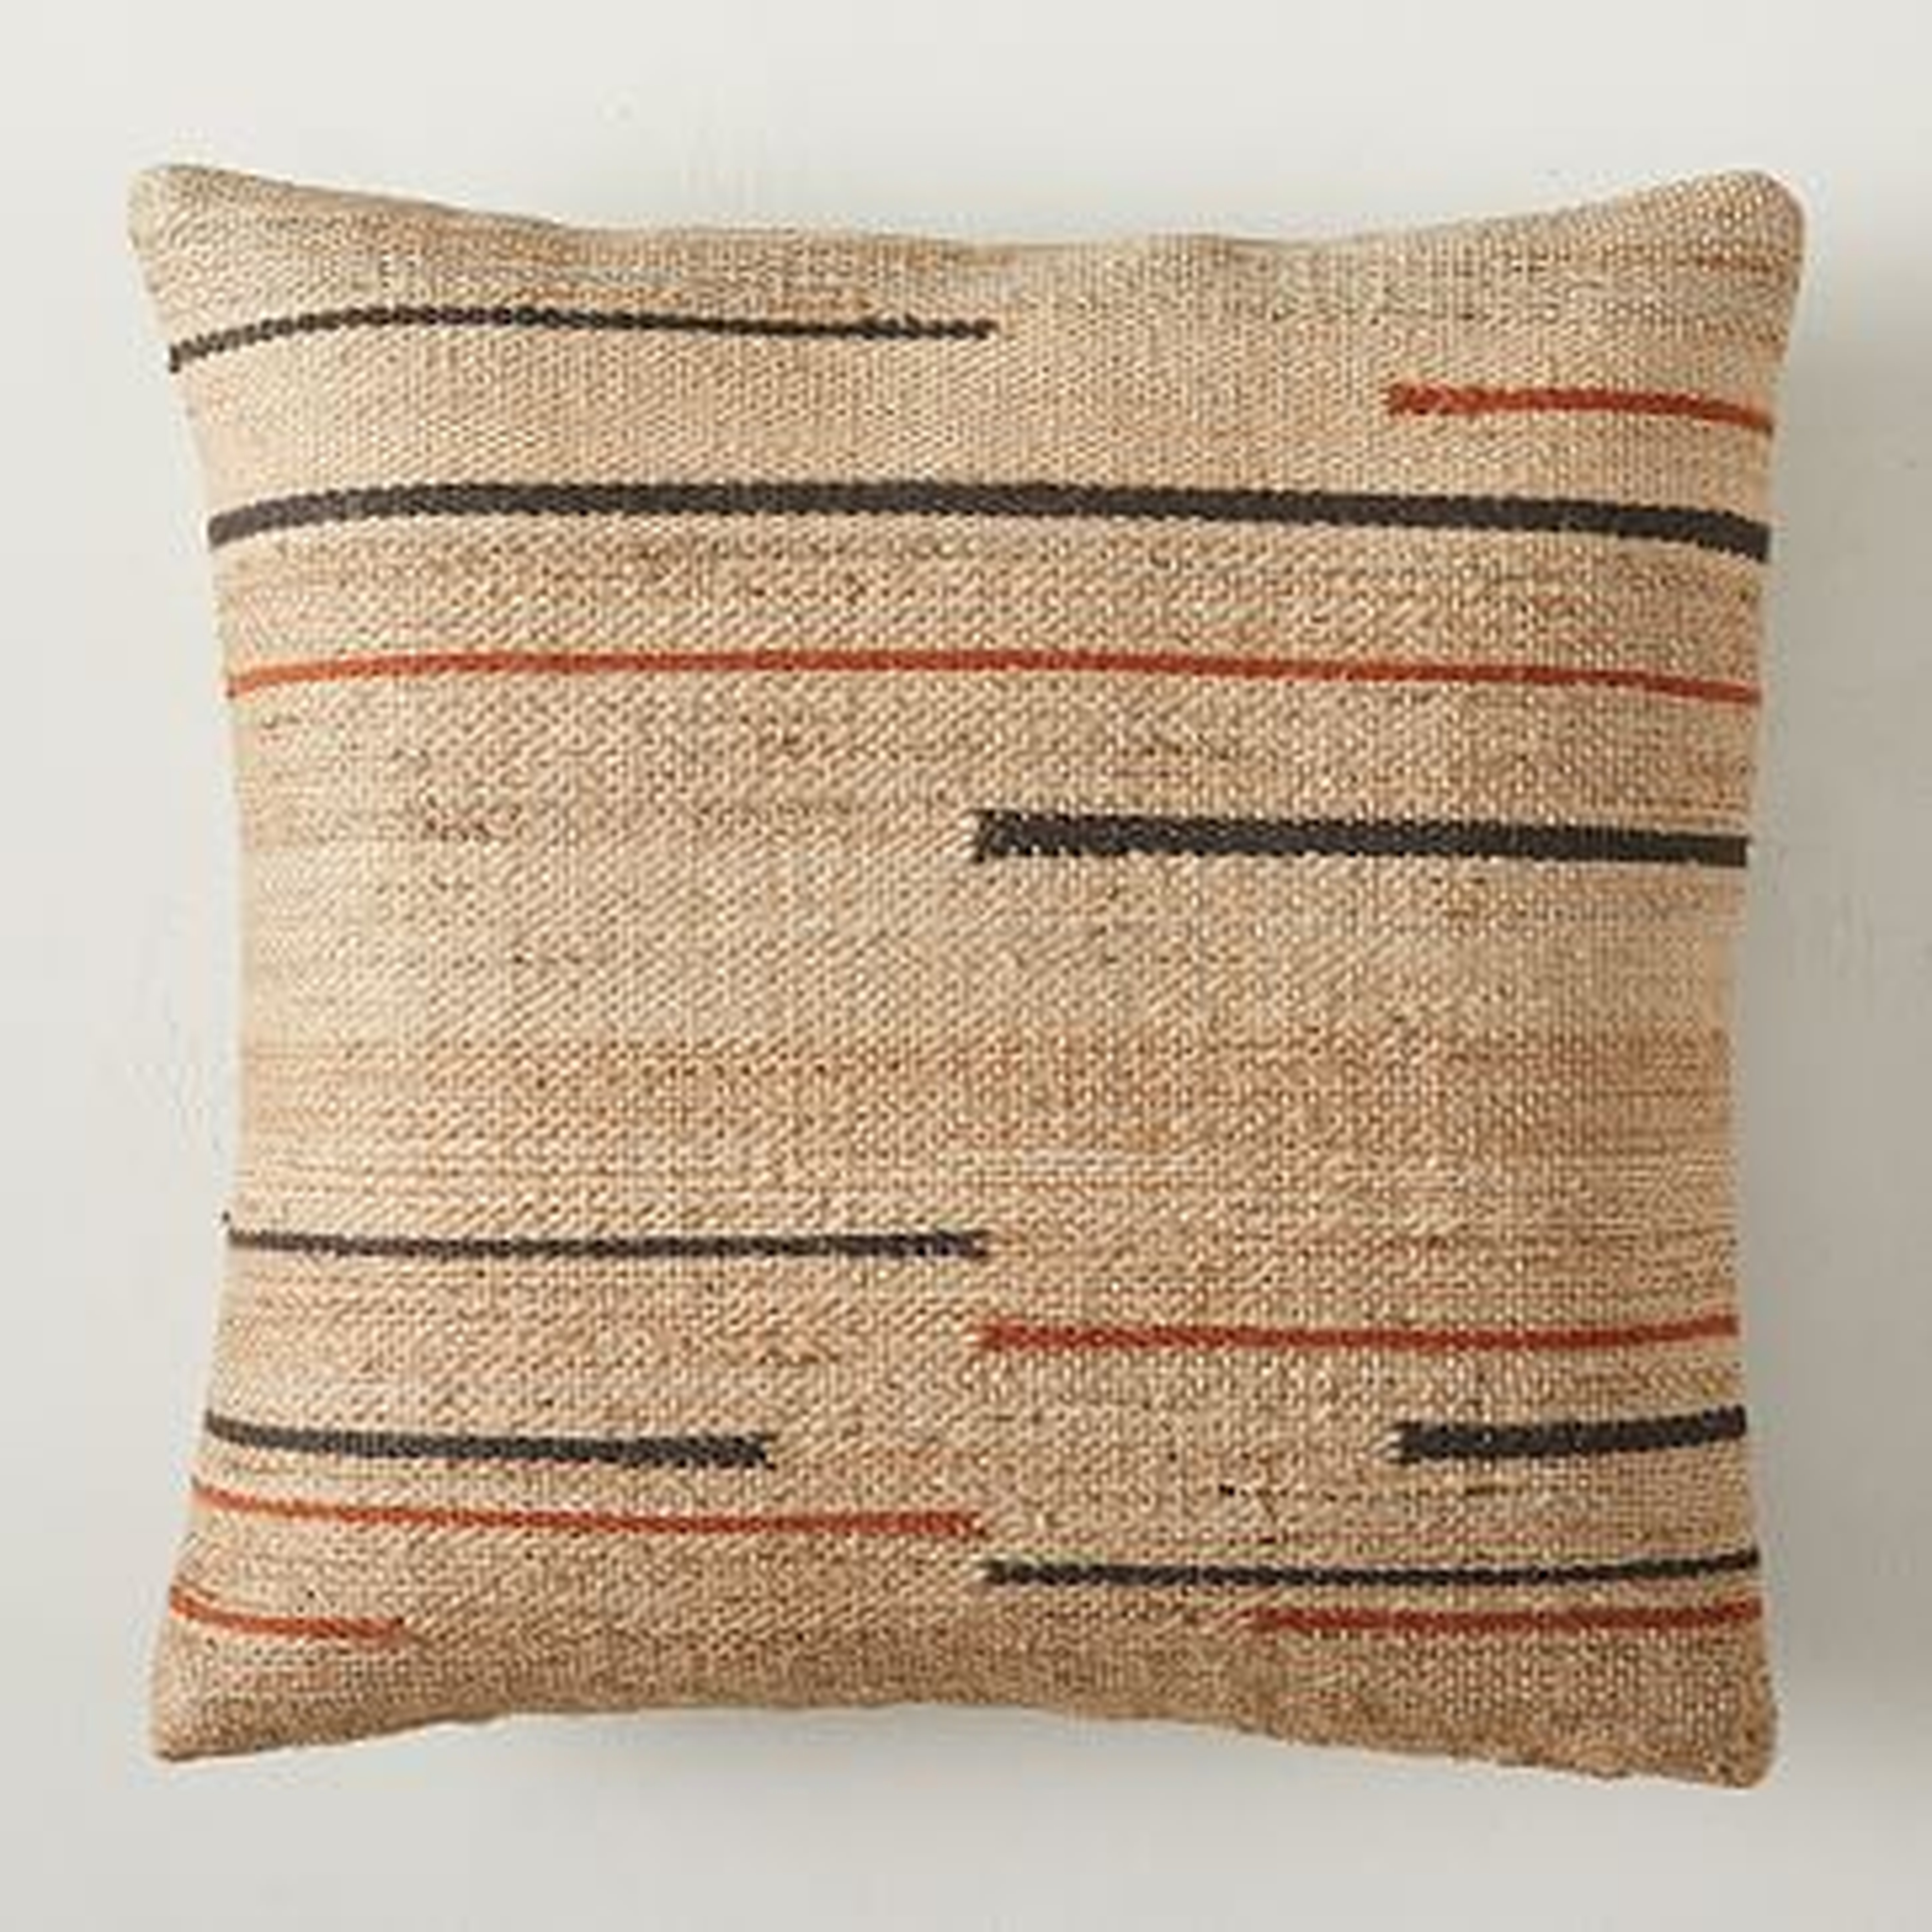 Varied Lengths Stripe Pillow Cover, 20"x20", Neutral - West Elm